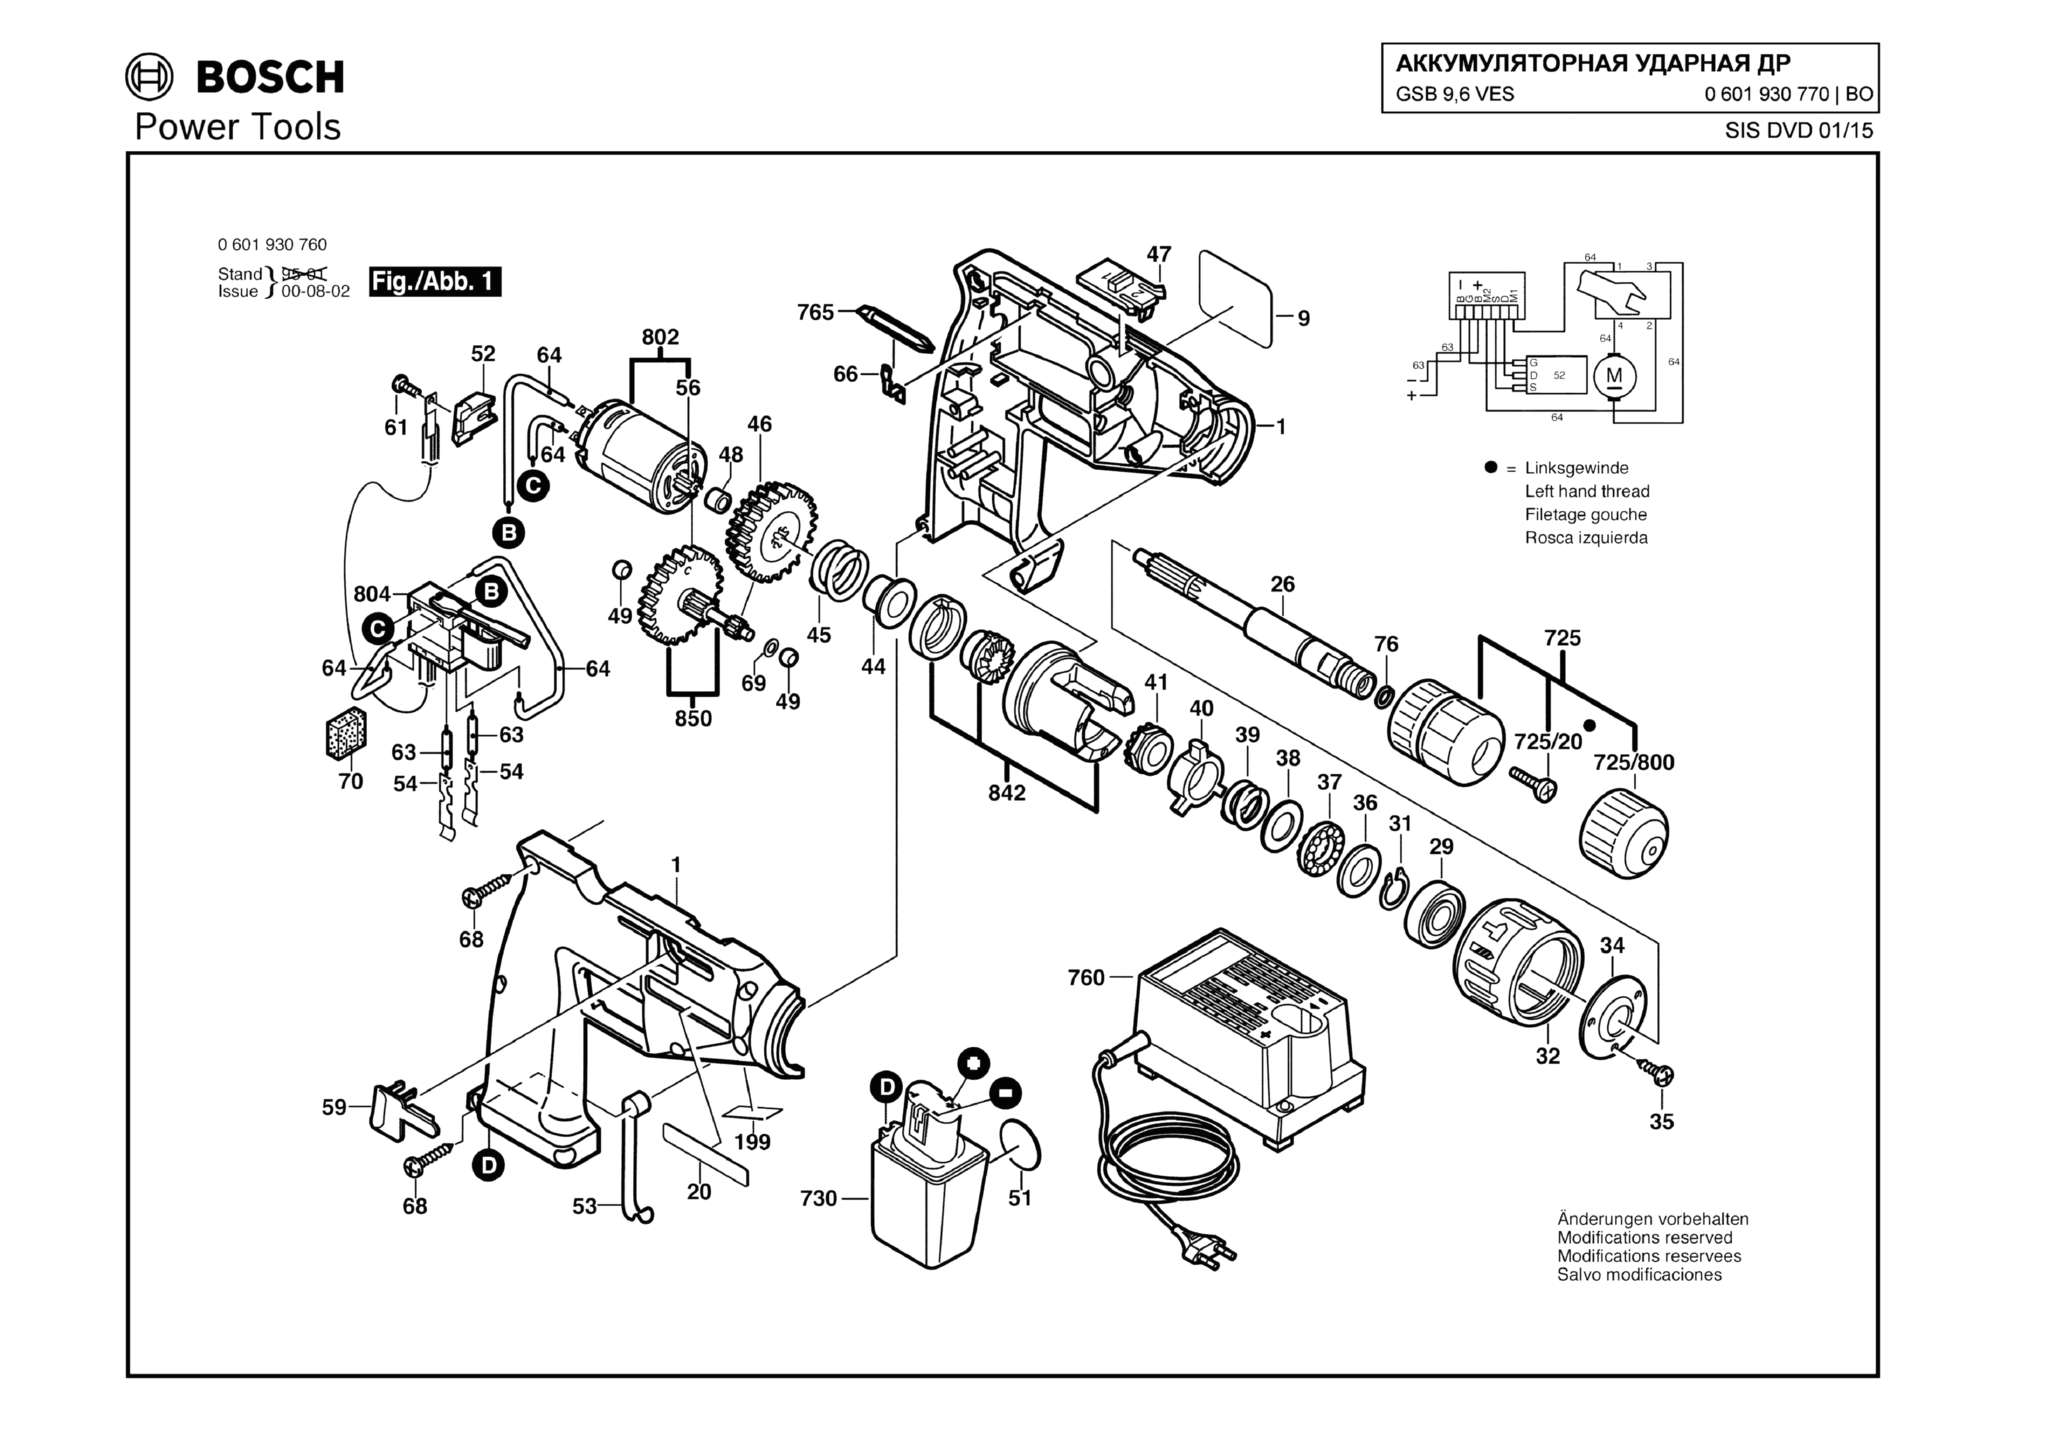 Запчасти, схема и деталировка Bosch GSB 9,6 VES (ТИП 0601930770)